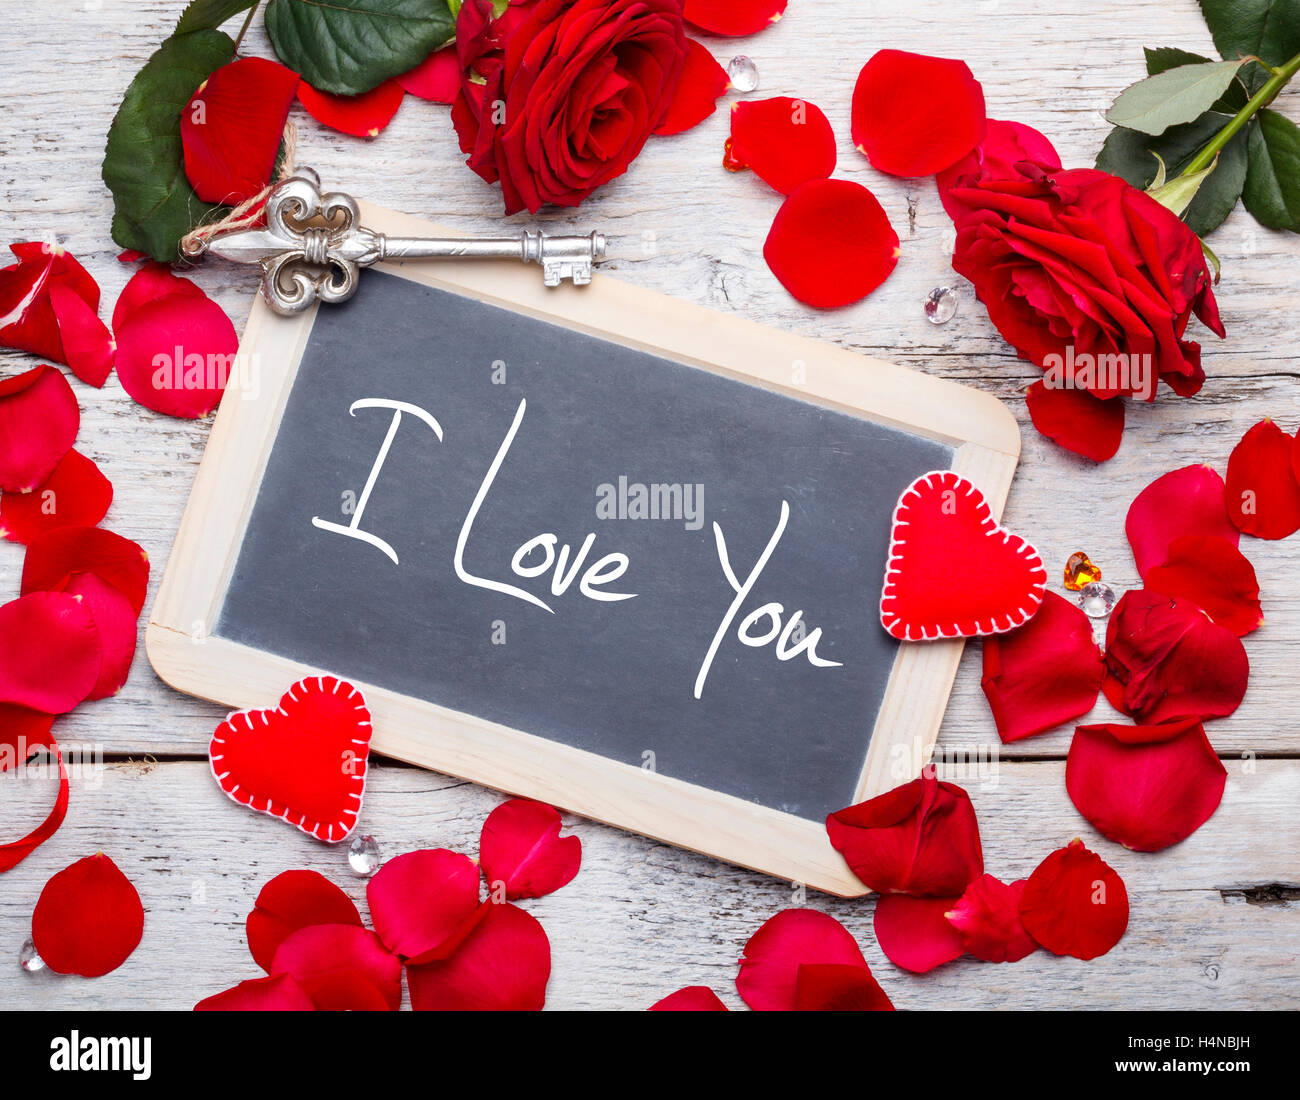 I love you written in white chalk on a black chalkboard Stock Photo